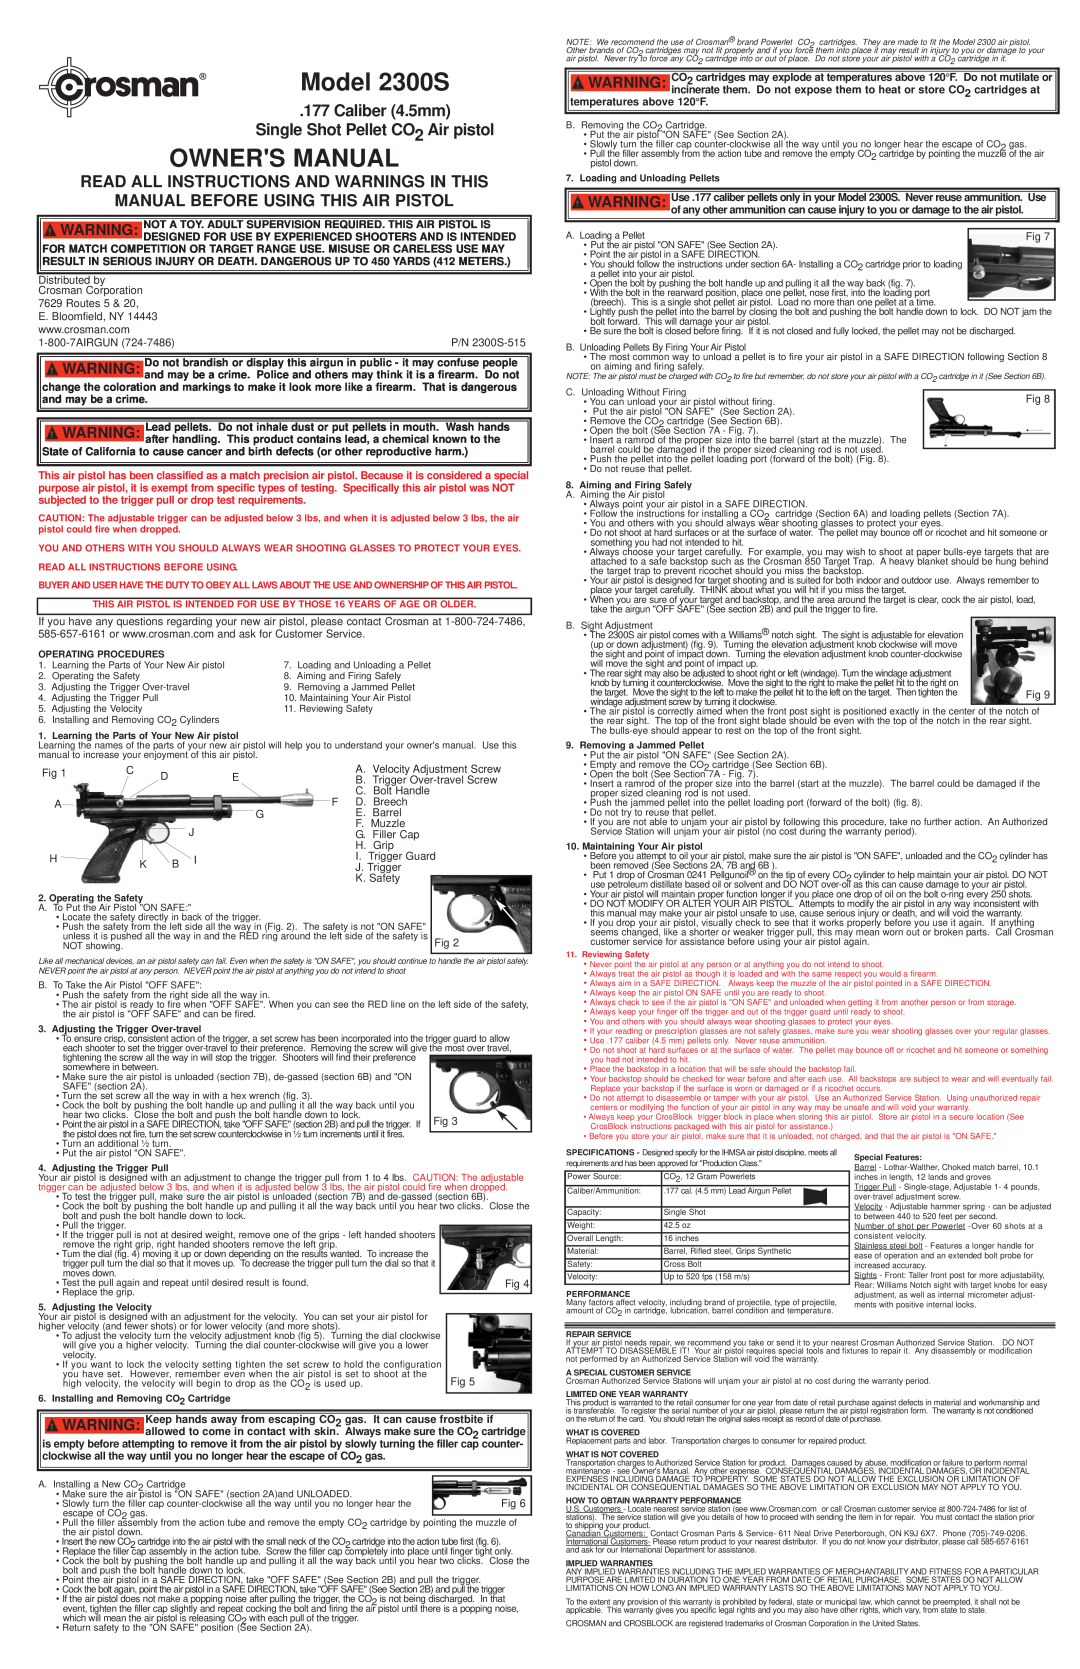 Hoover owner manual Model 2300S, Owners Manual, Caliber 4.5mm Single Shot Pellet CO2 Air pistol 